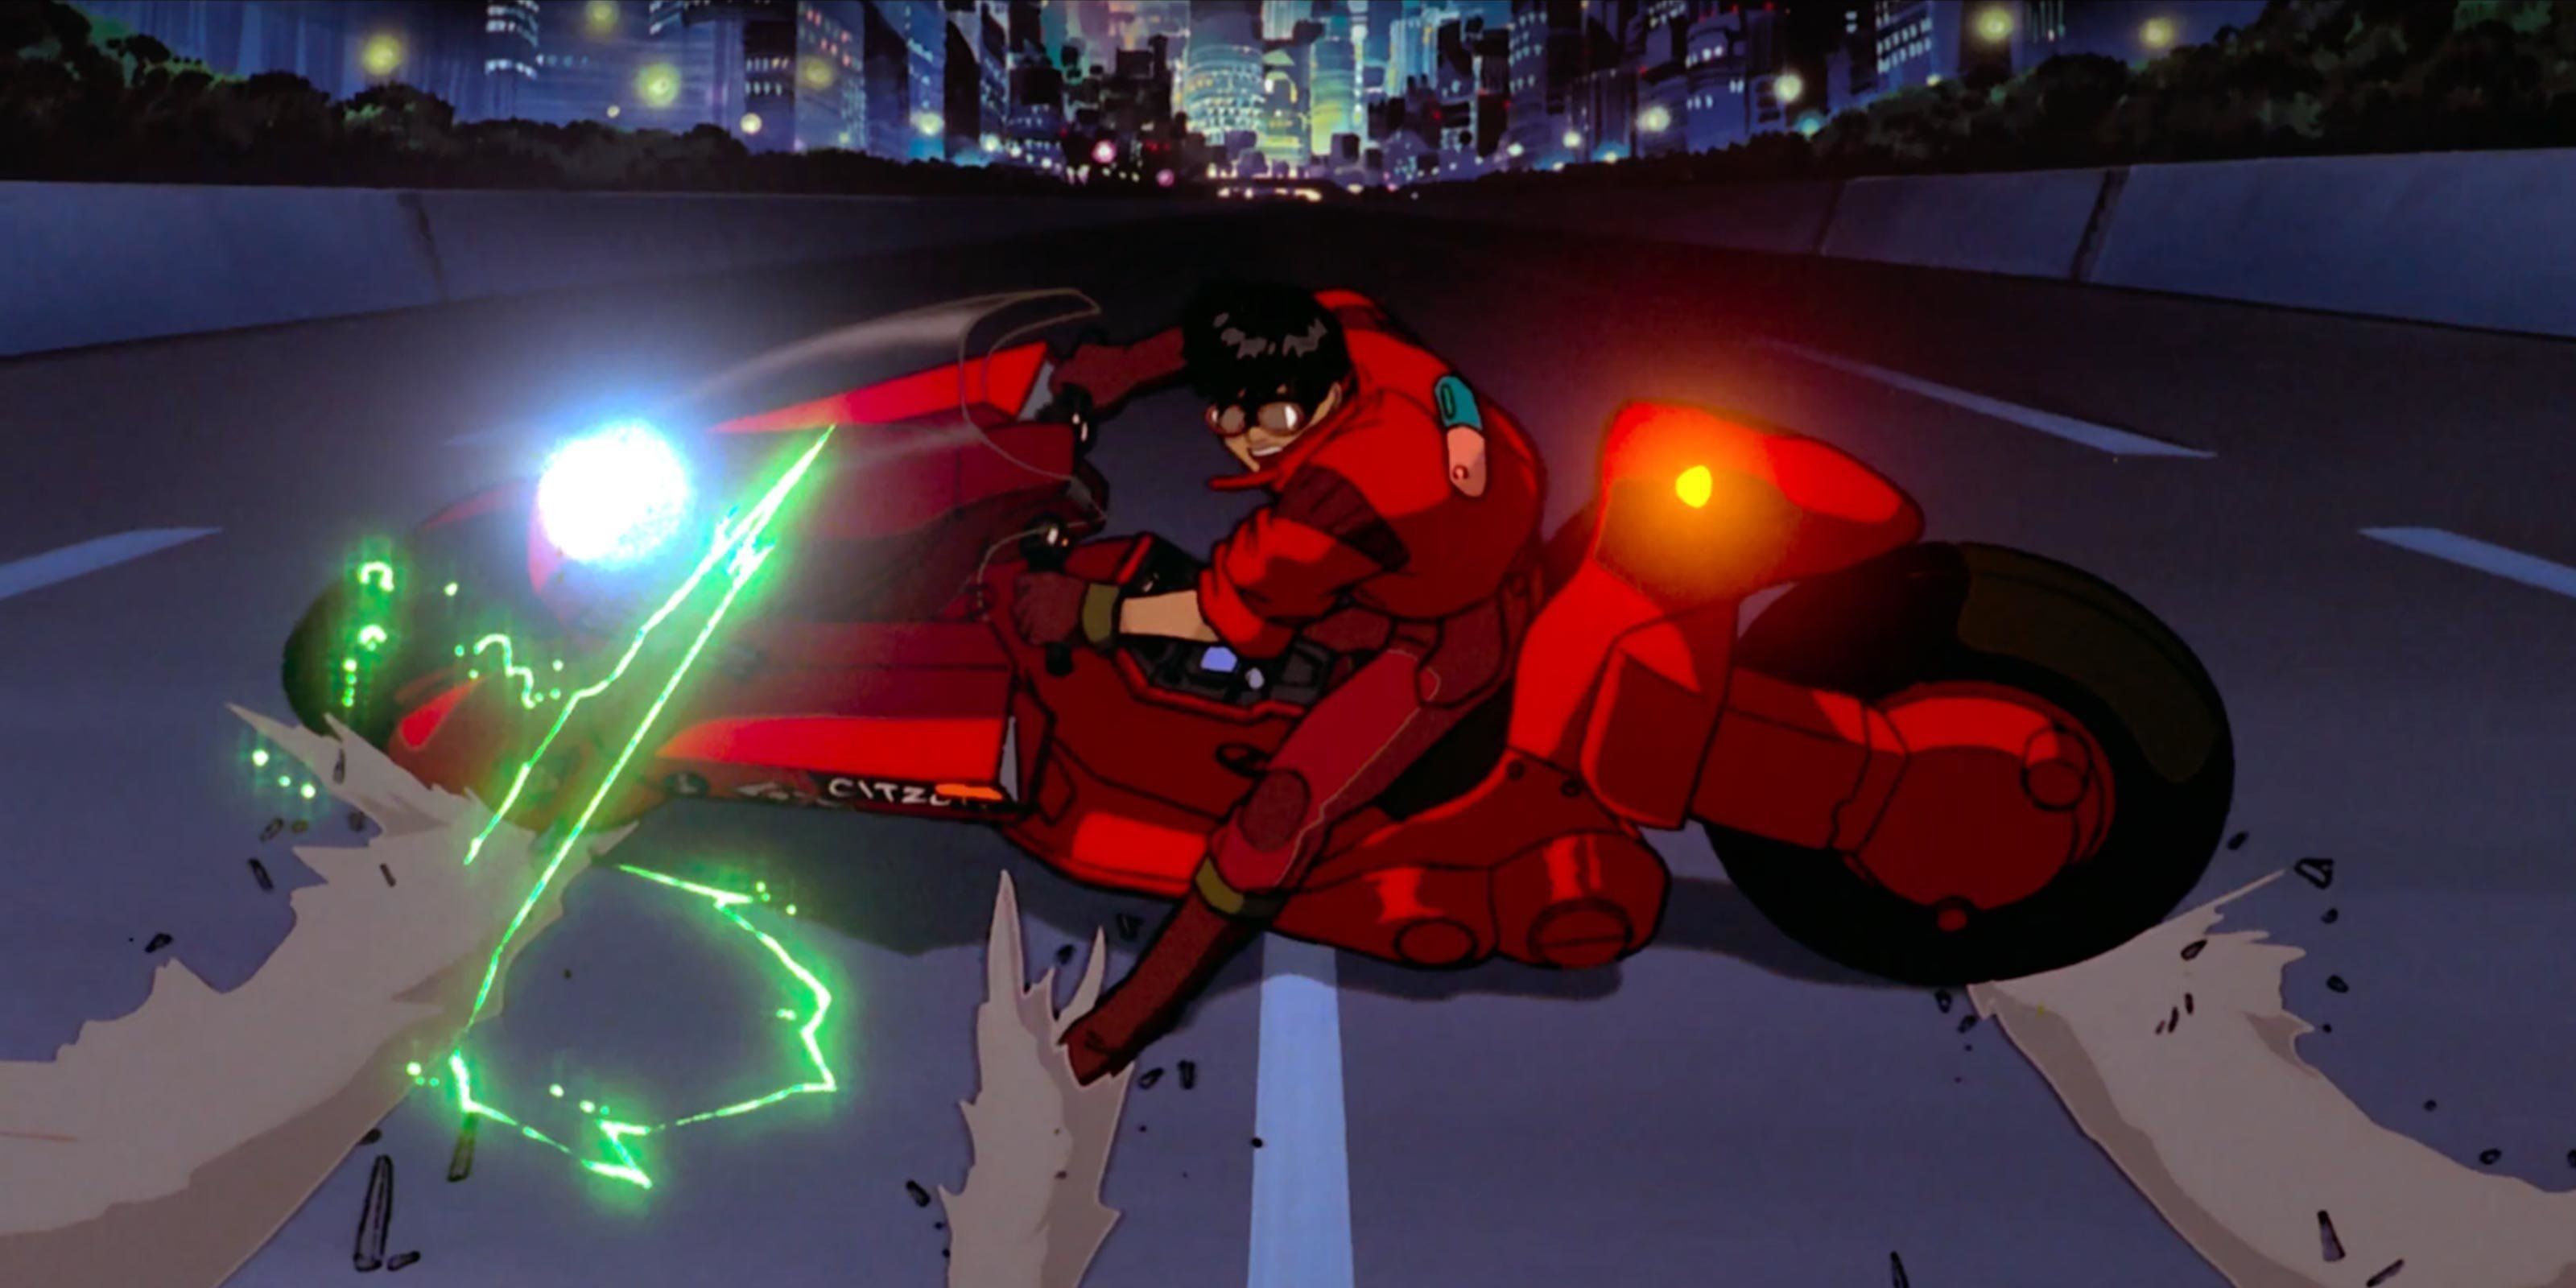 Kaneda drifting his bike in the Akira Slide moment of Akira